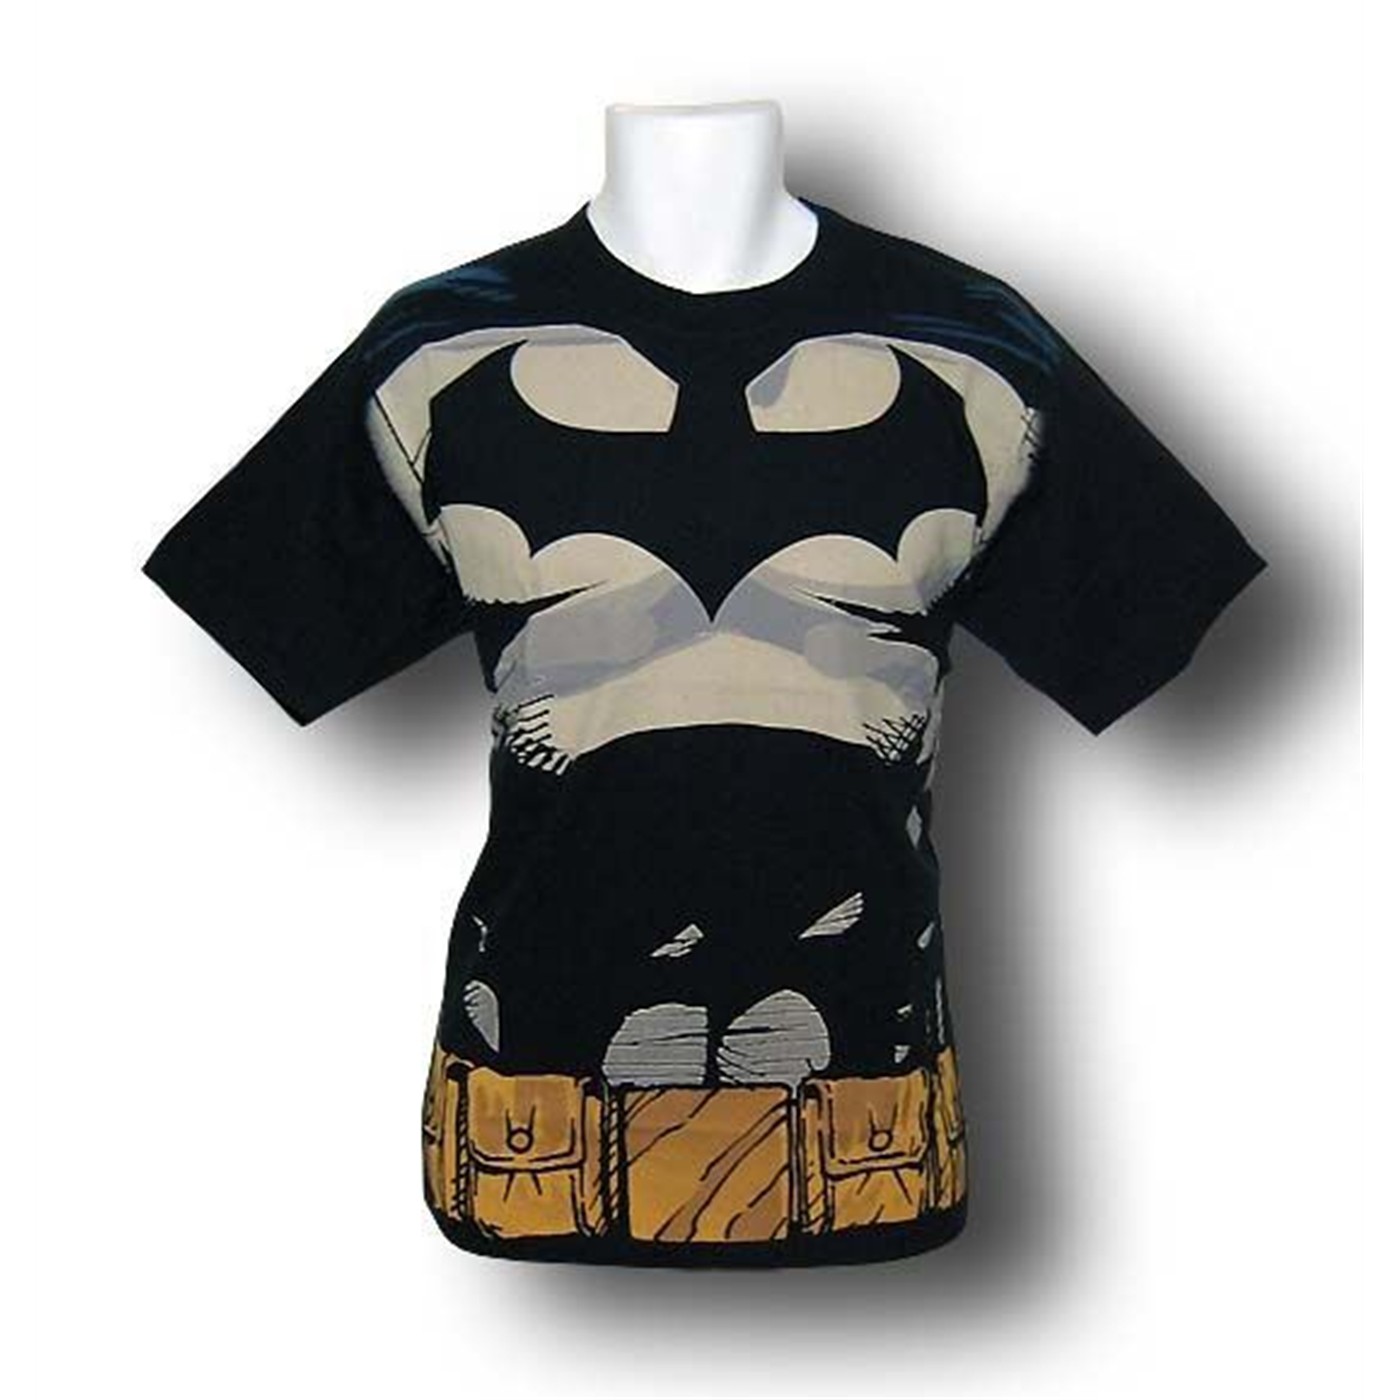 Batman Illustrated Muscles Costume T-Shirt